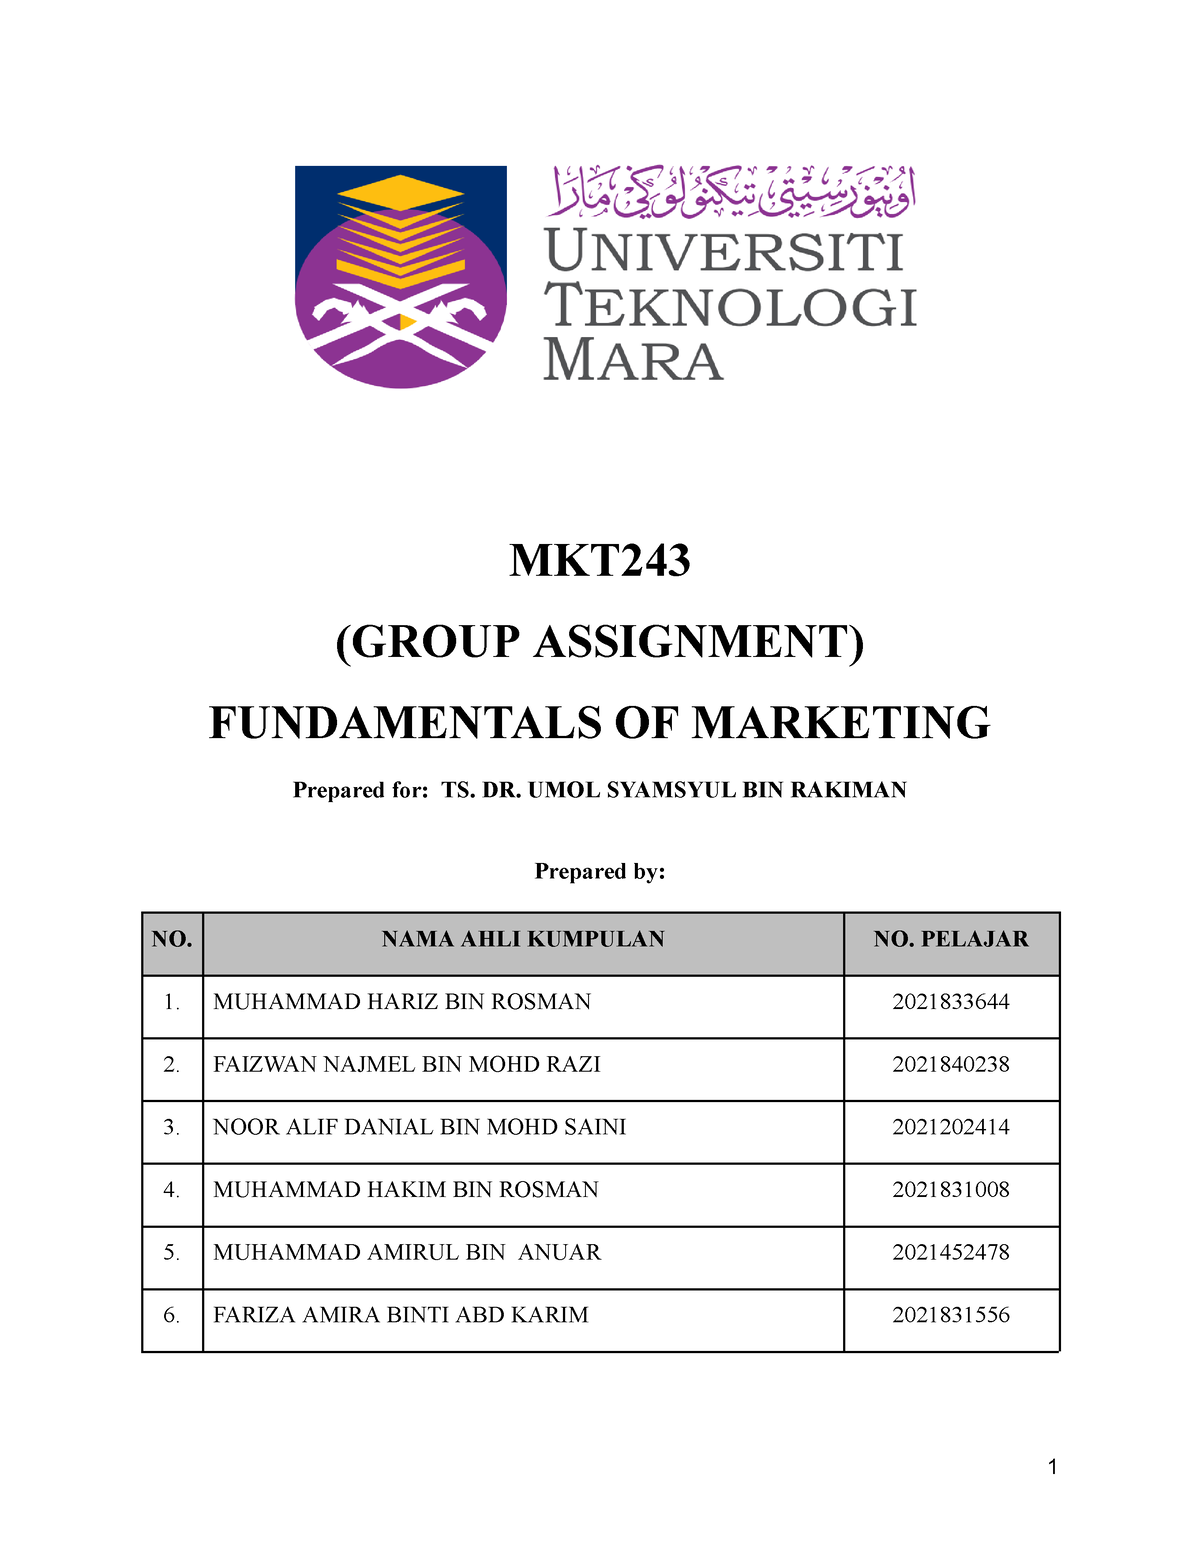 mkt243 group assignment 2020